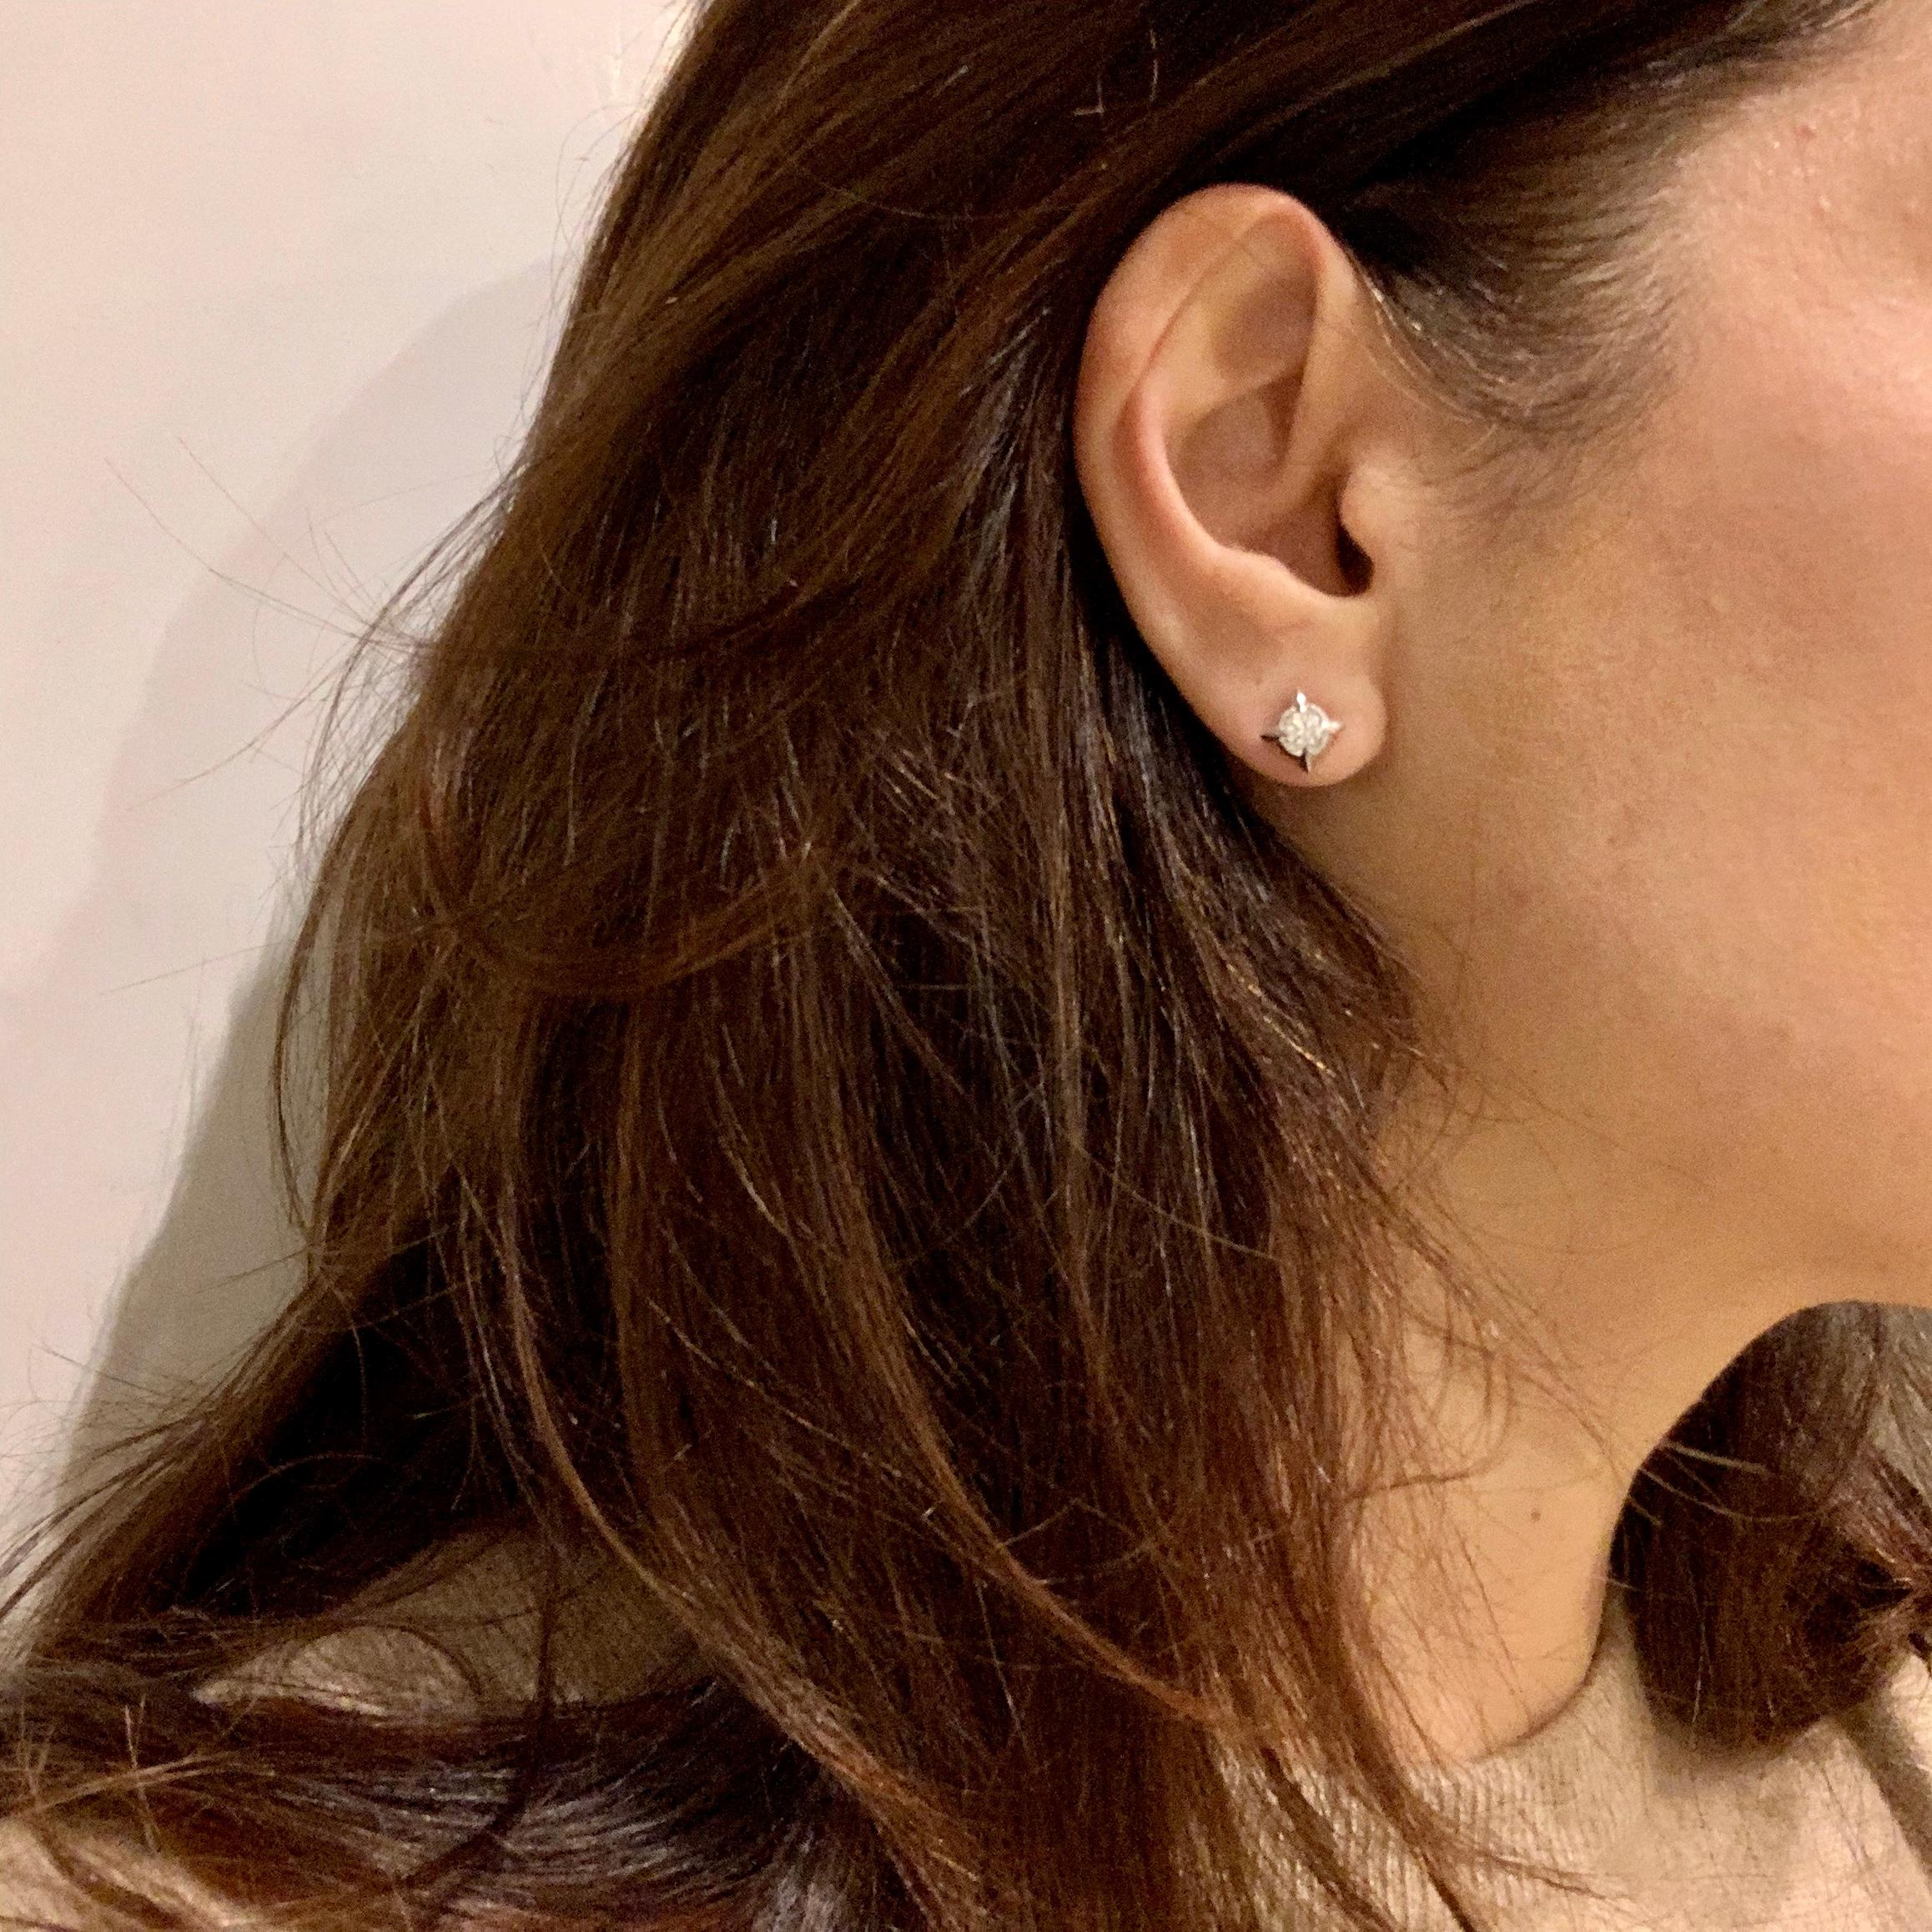 Brilliant Cut 0.46 Carat Diamond 18Kt White Gold Renaissance Stud Earrings